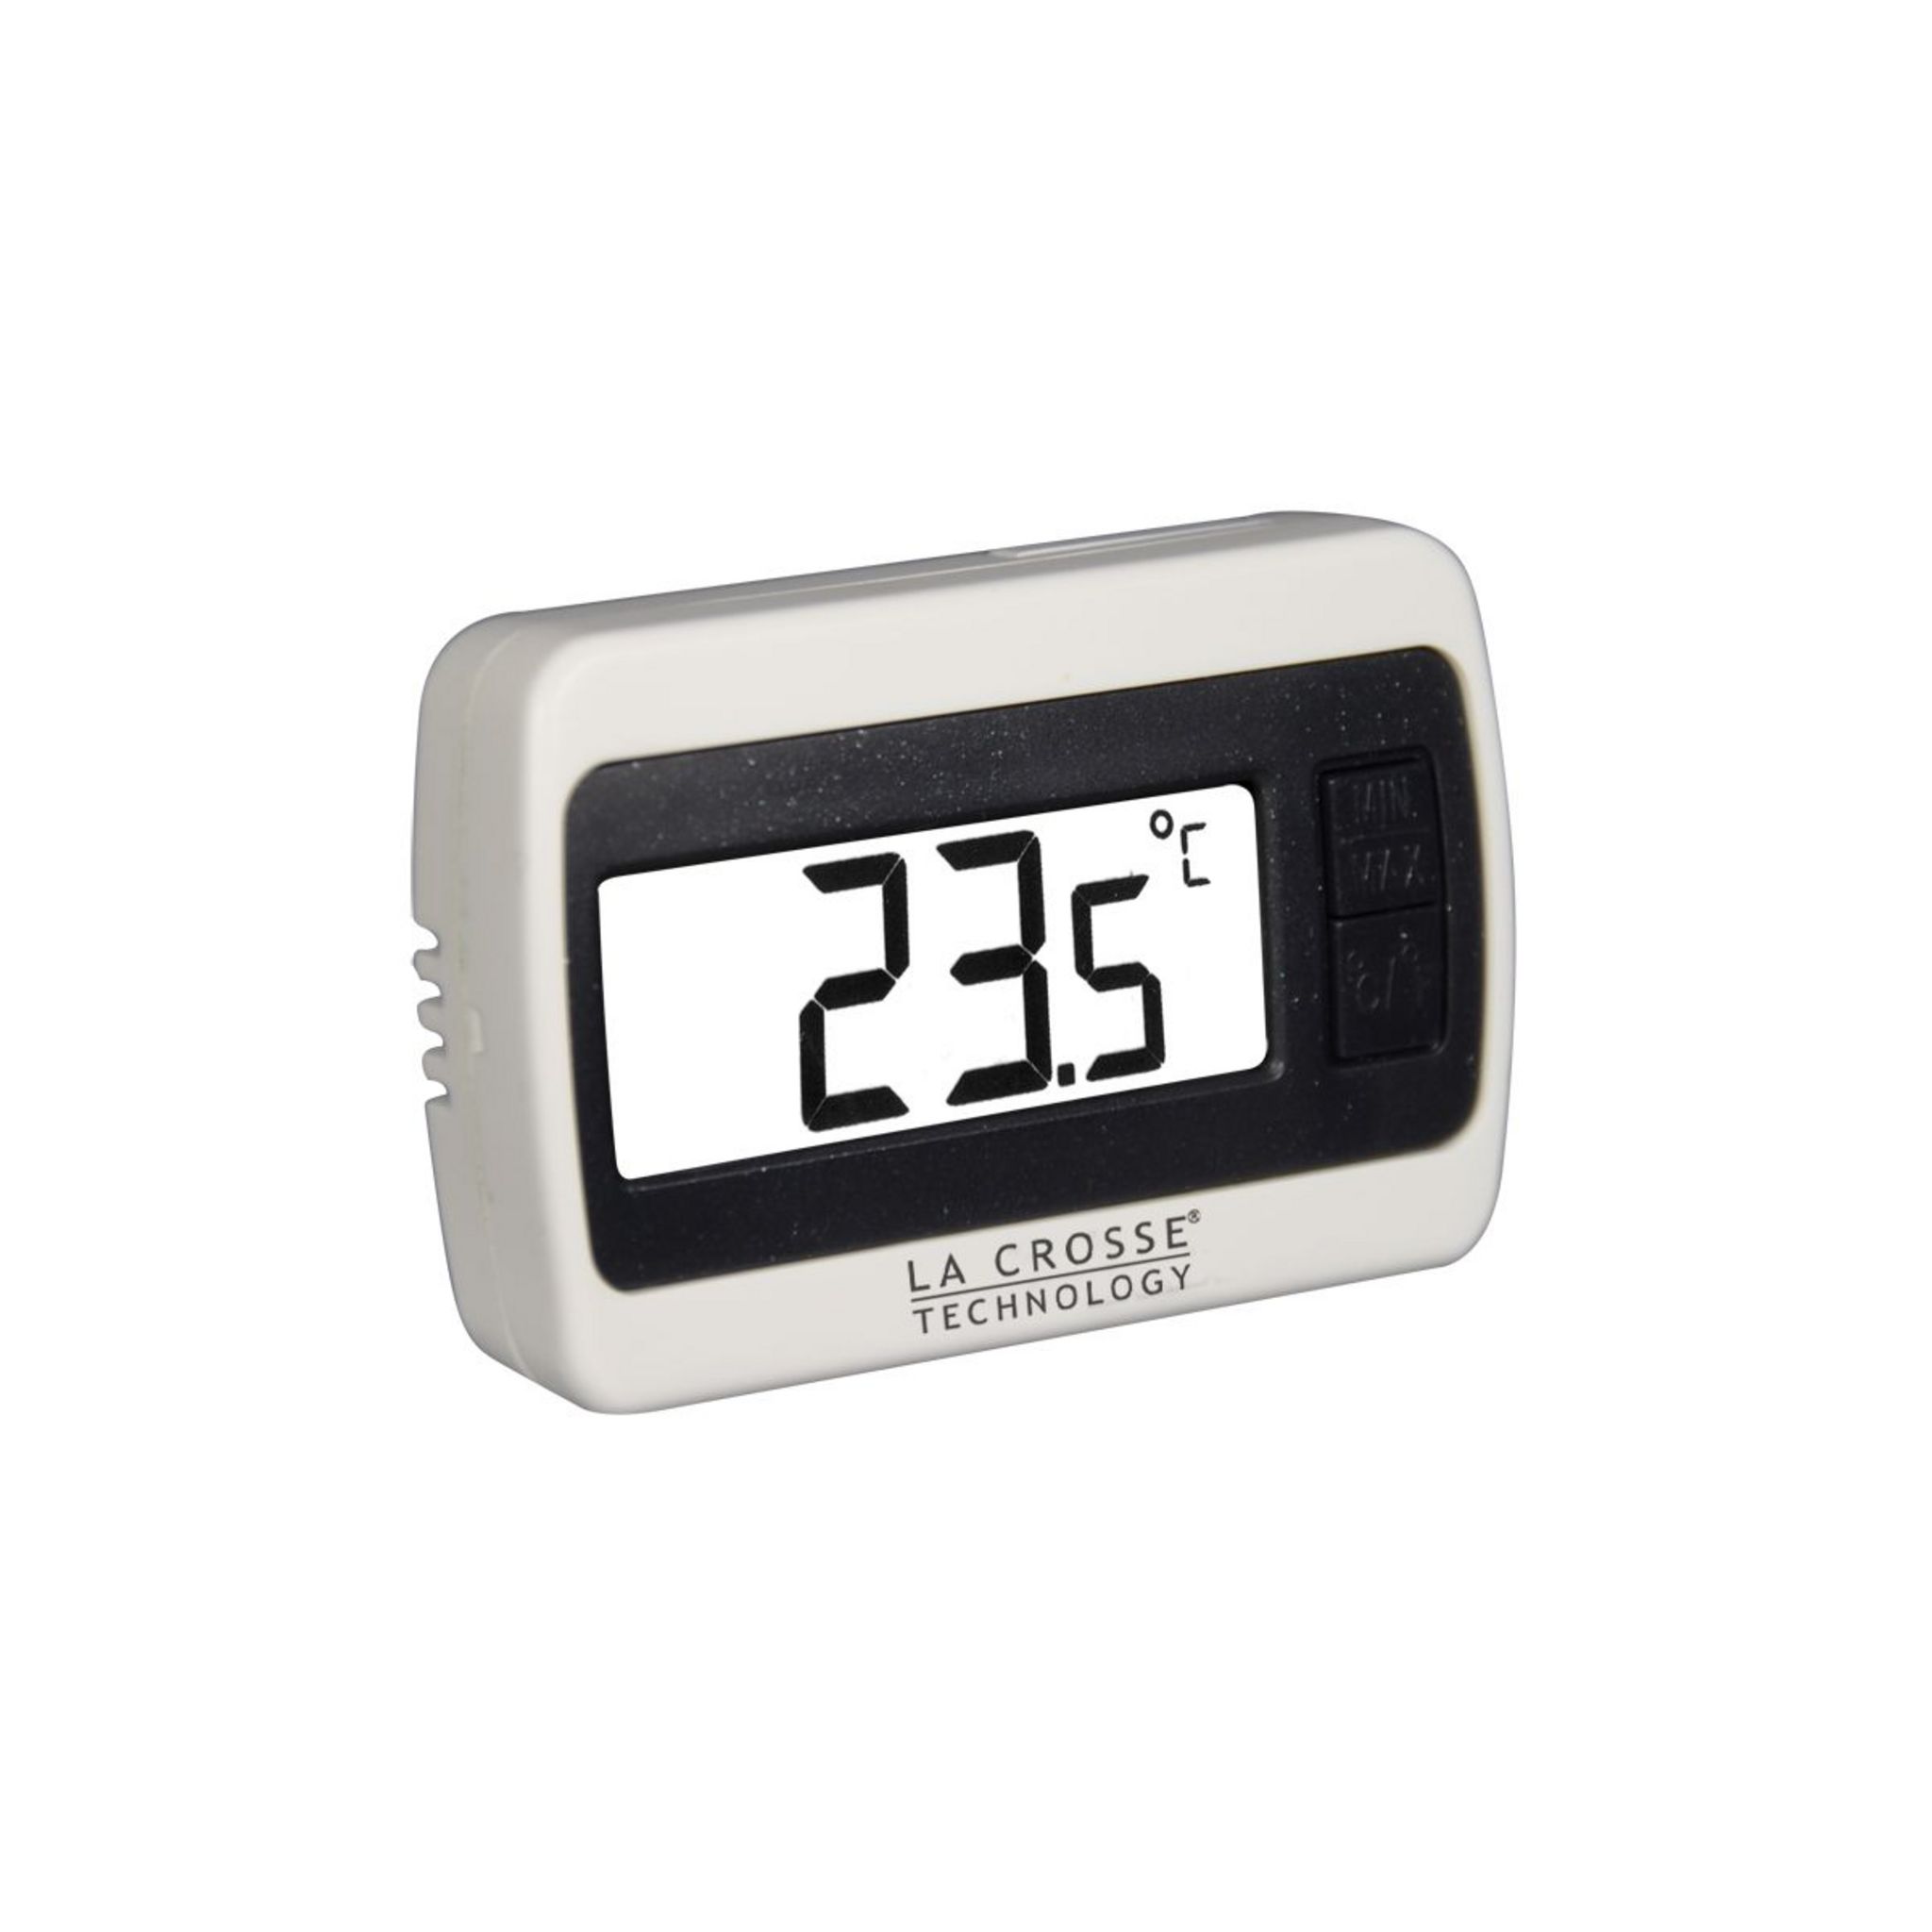 Thermometre La Crosse Technology - Ws 6811 Whi-ora à Prix Carrefour